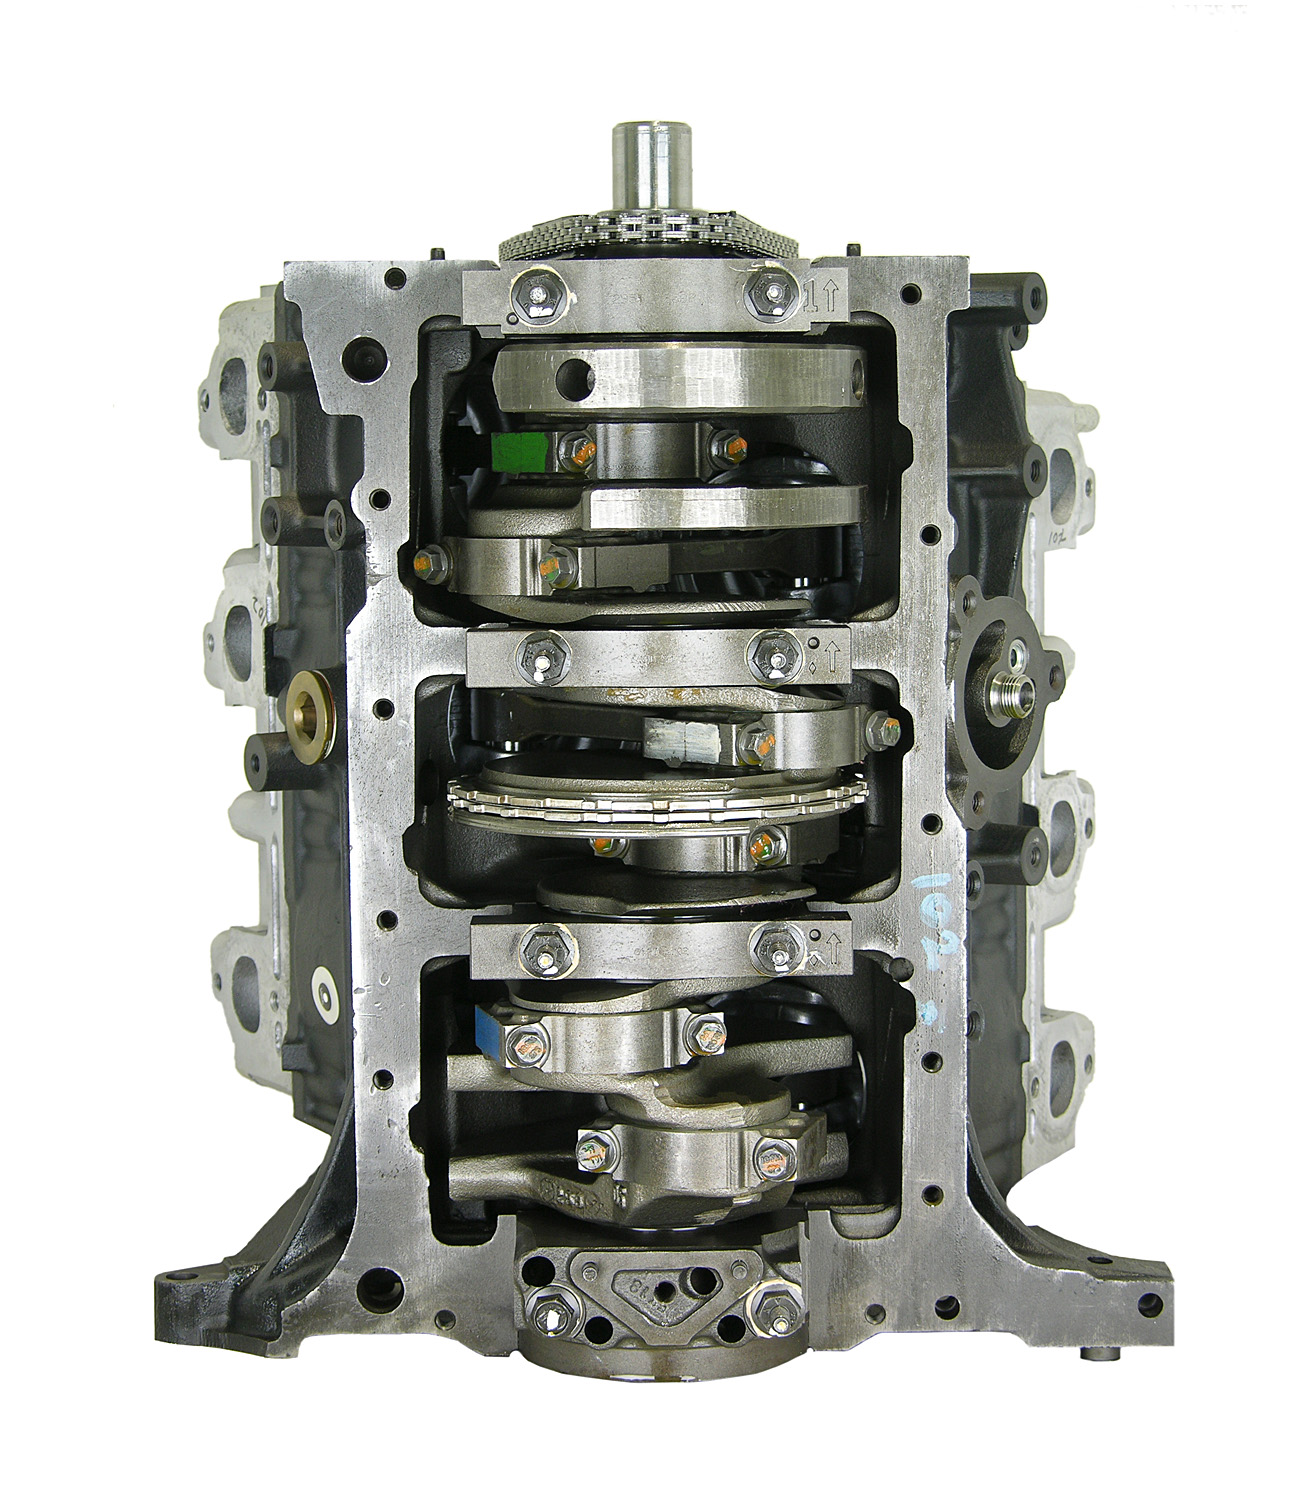 Chevy 3.5L V6 Remanufactured Engine - 2004-2006